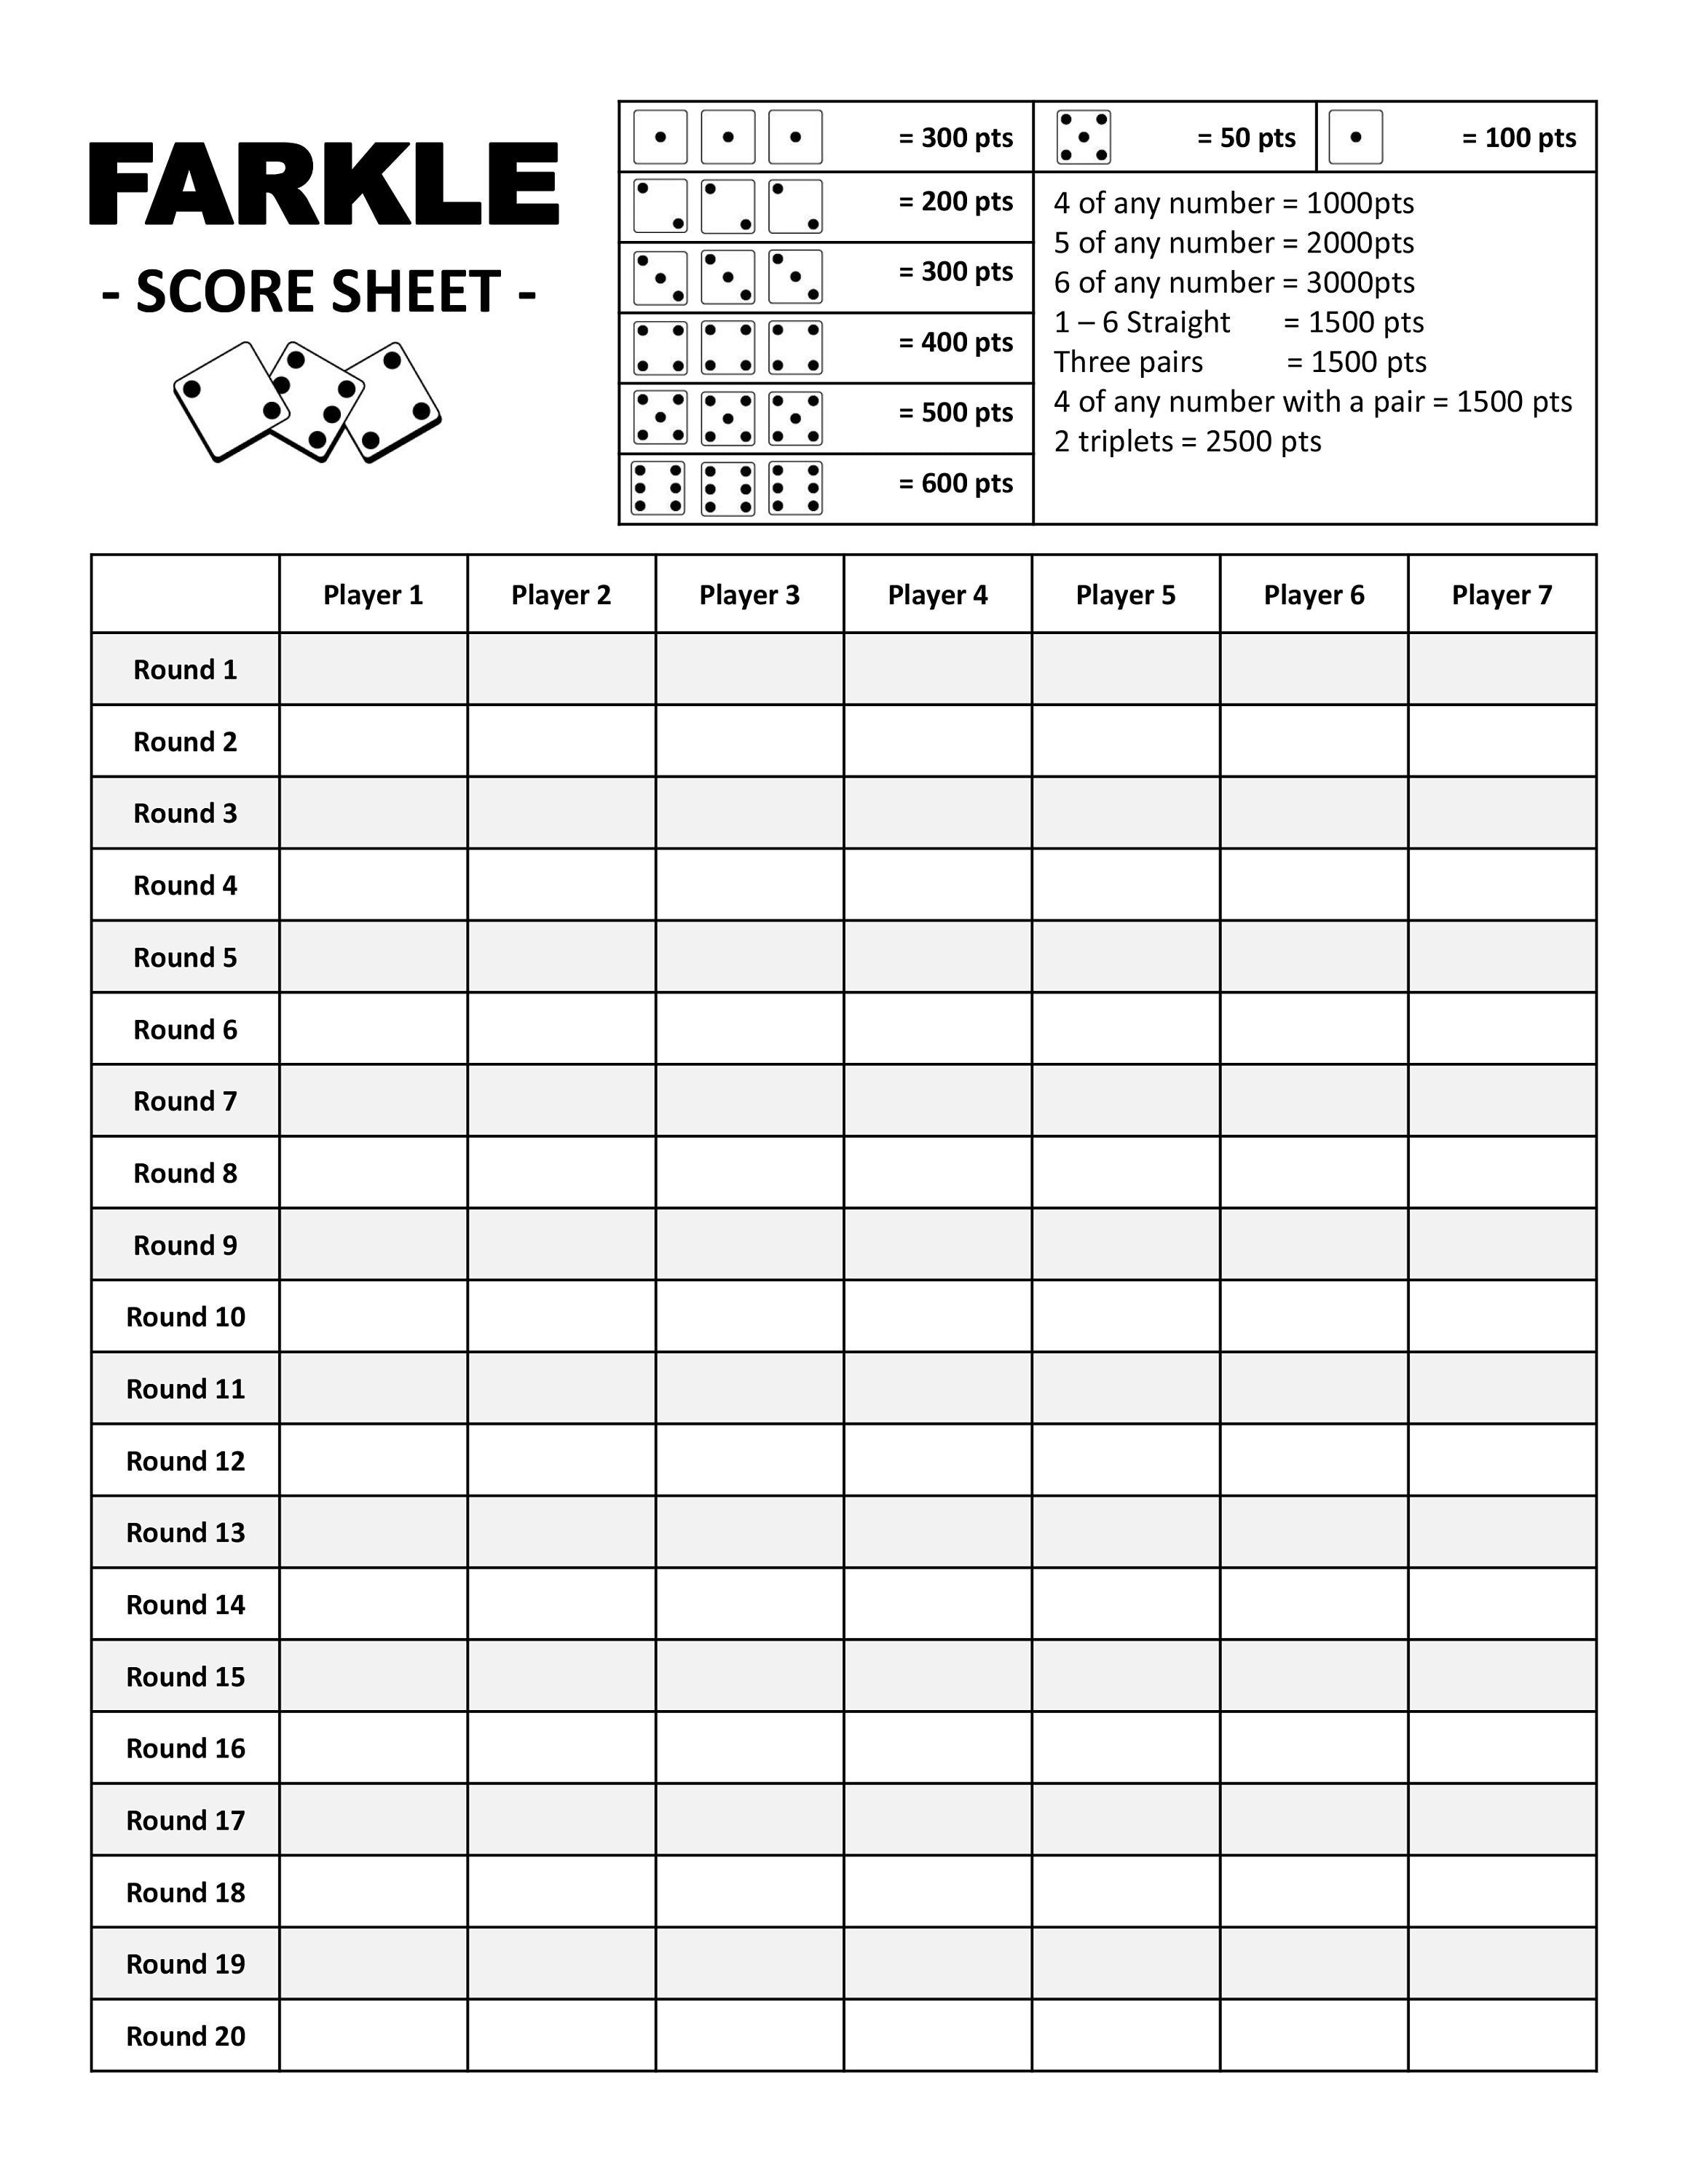 farkle-score-sheet-printable